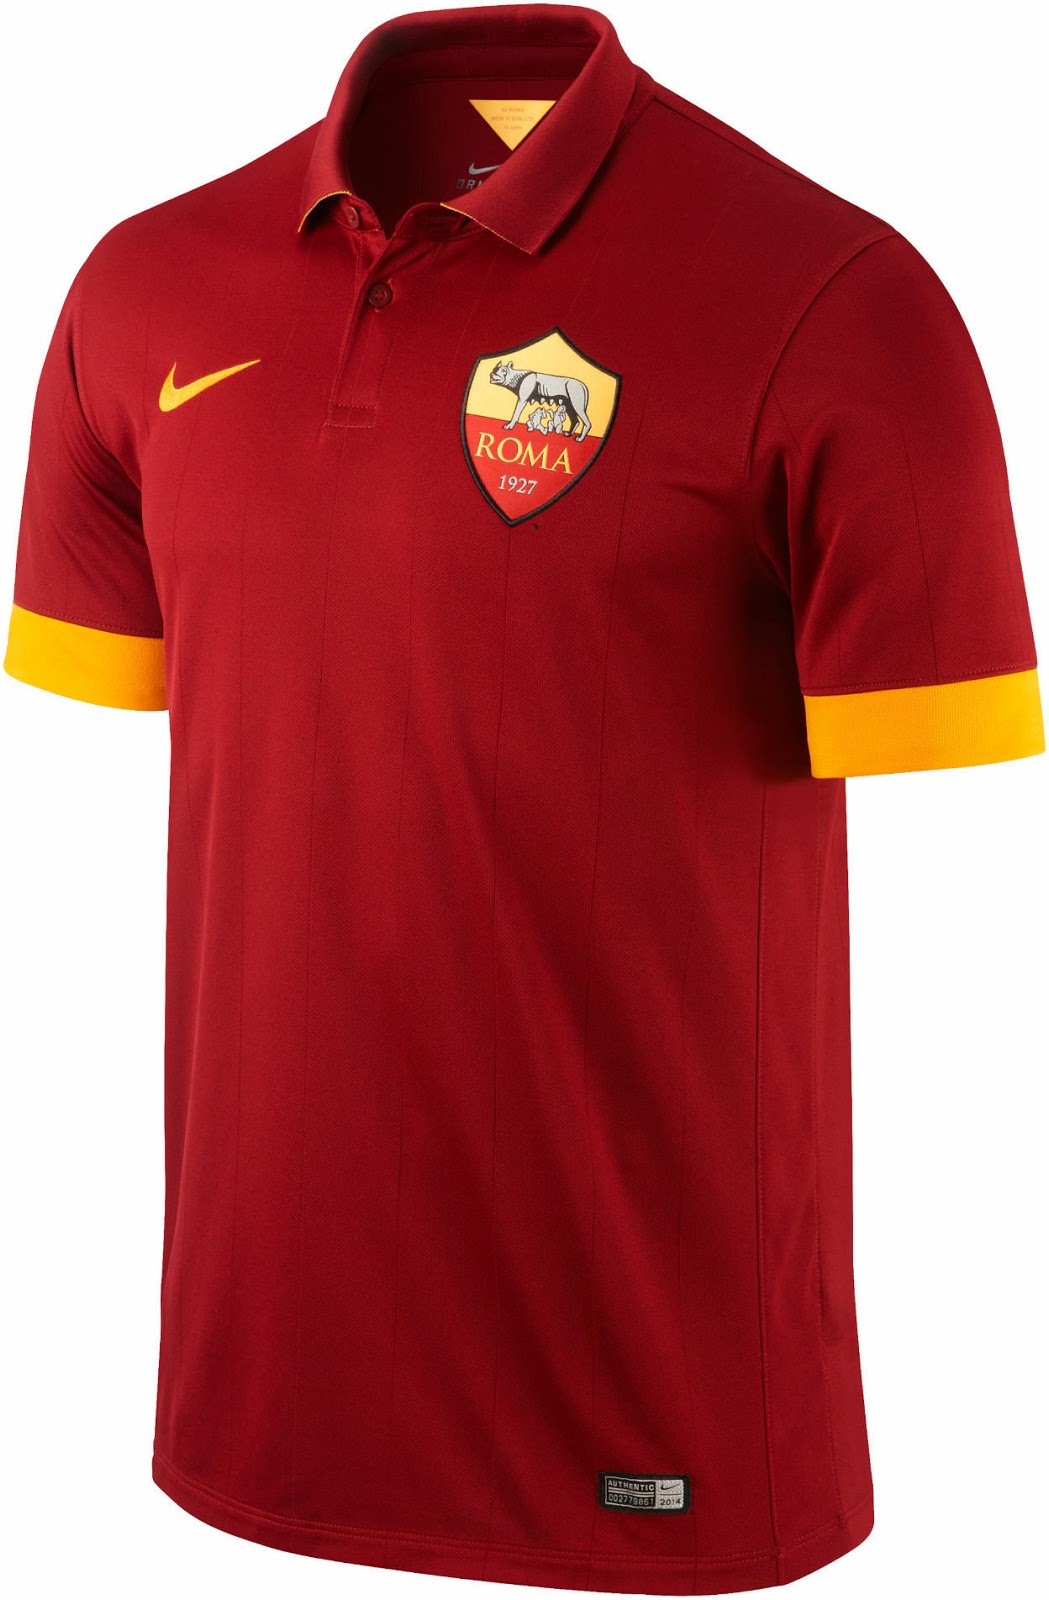 AS Roma thuisshirt 2014/2015 - Voetbalshirtjes.com